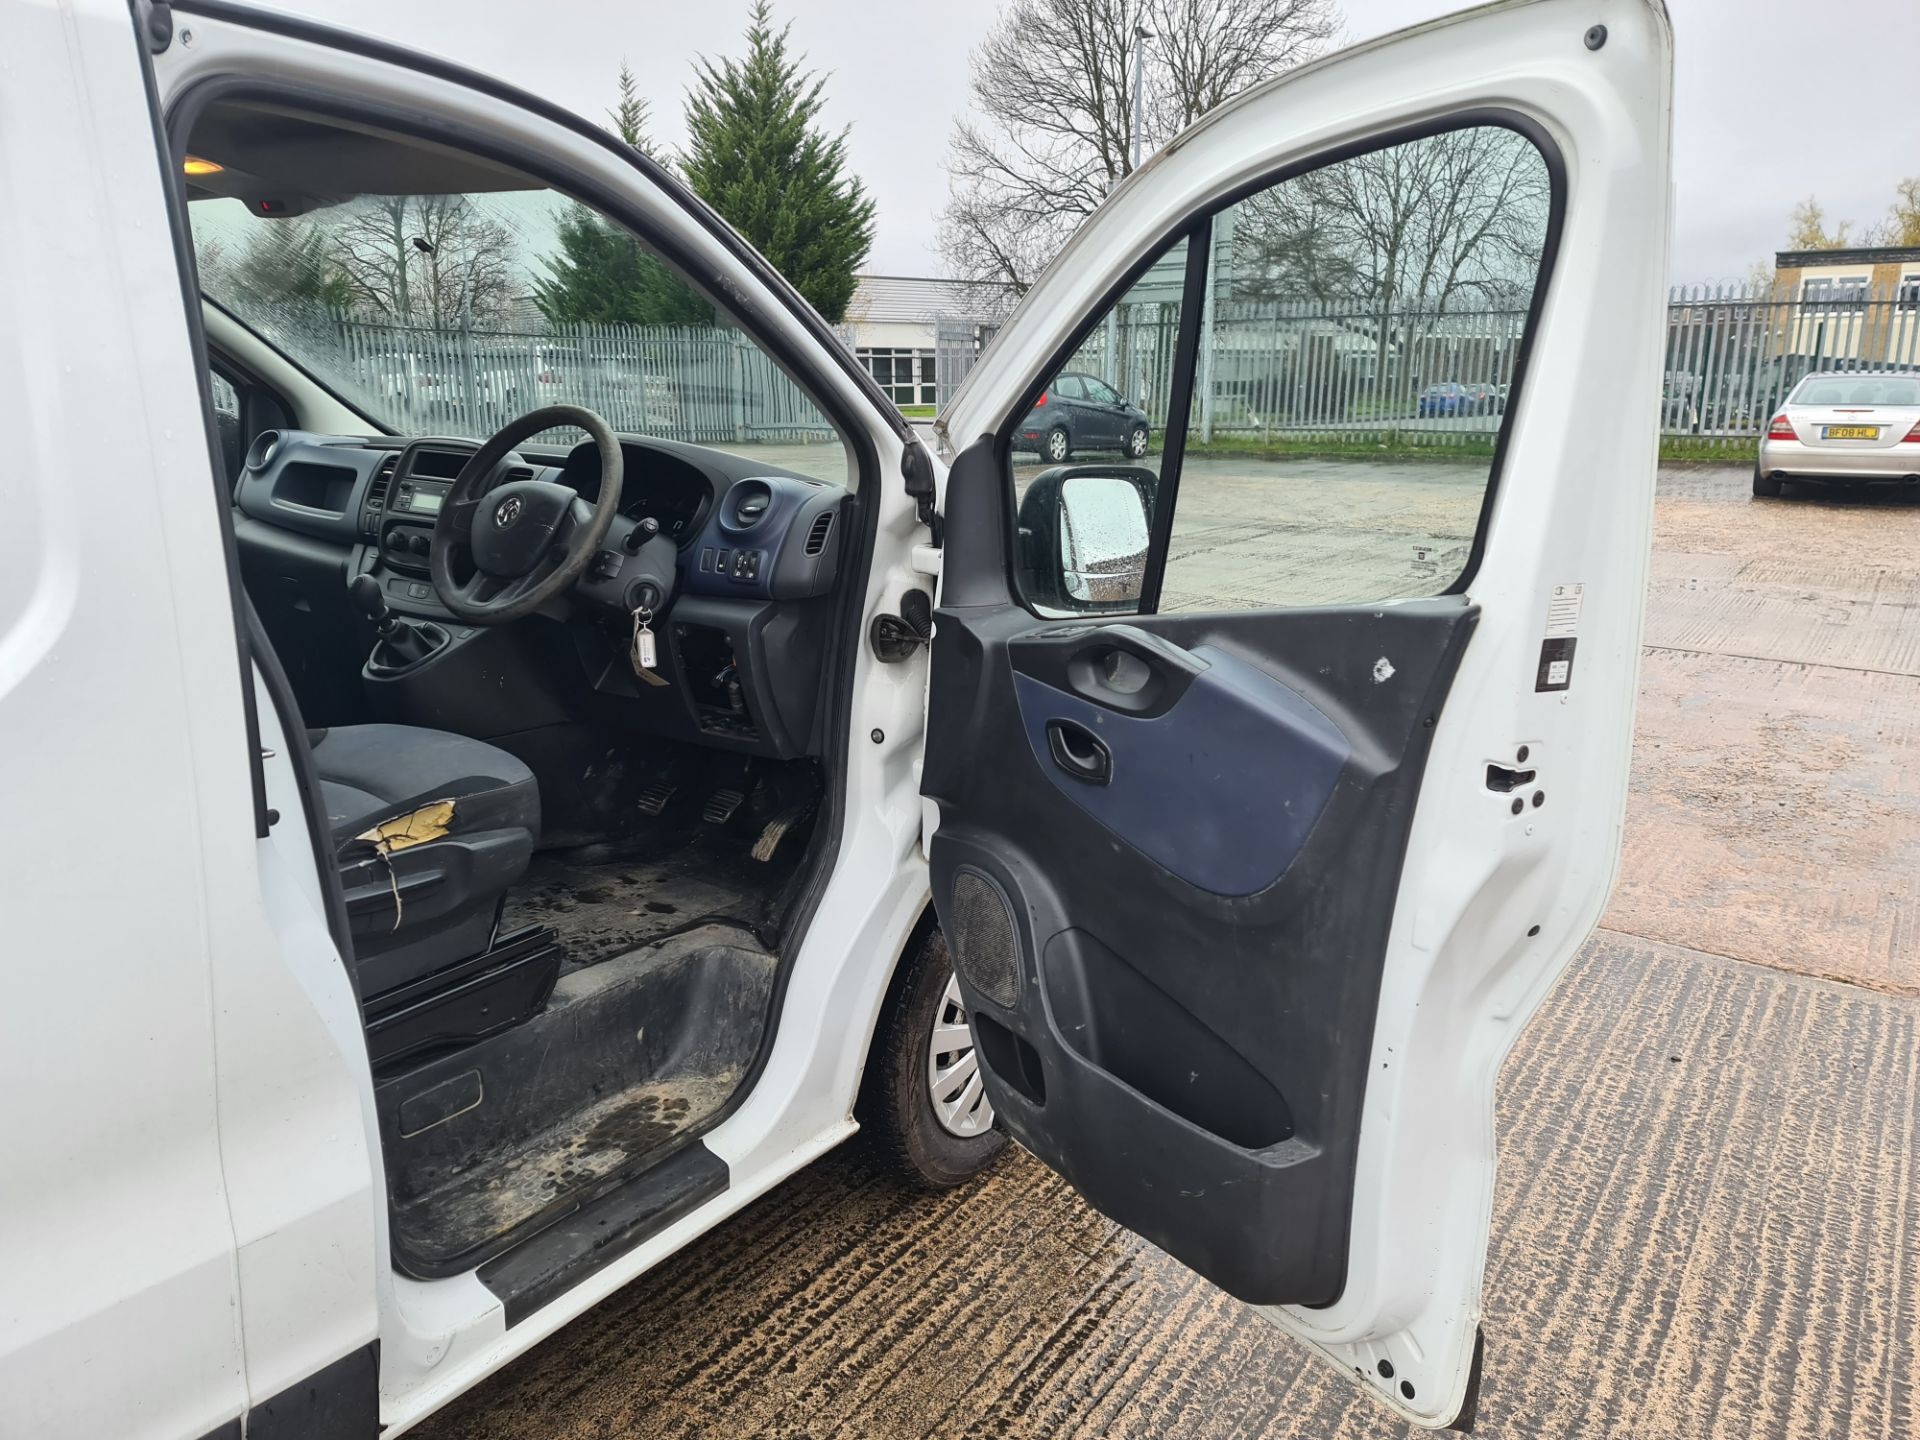 2015 Vauxhall Vivaro 2900 CDTi panel van - Image 10 of 66